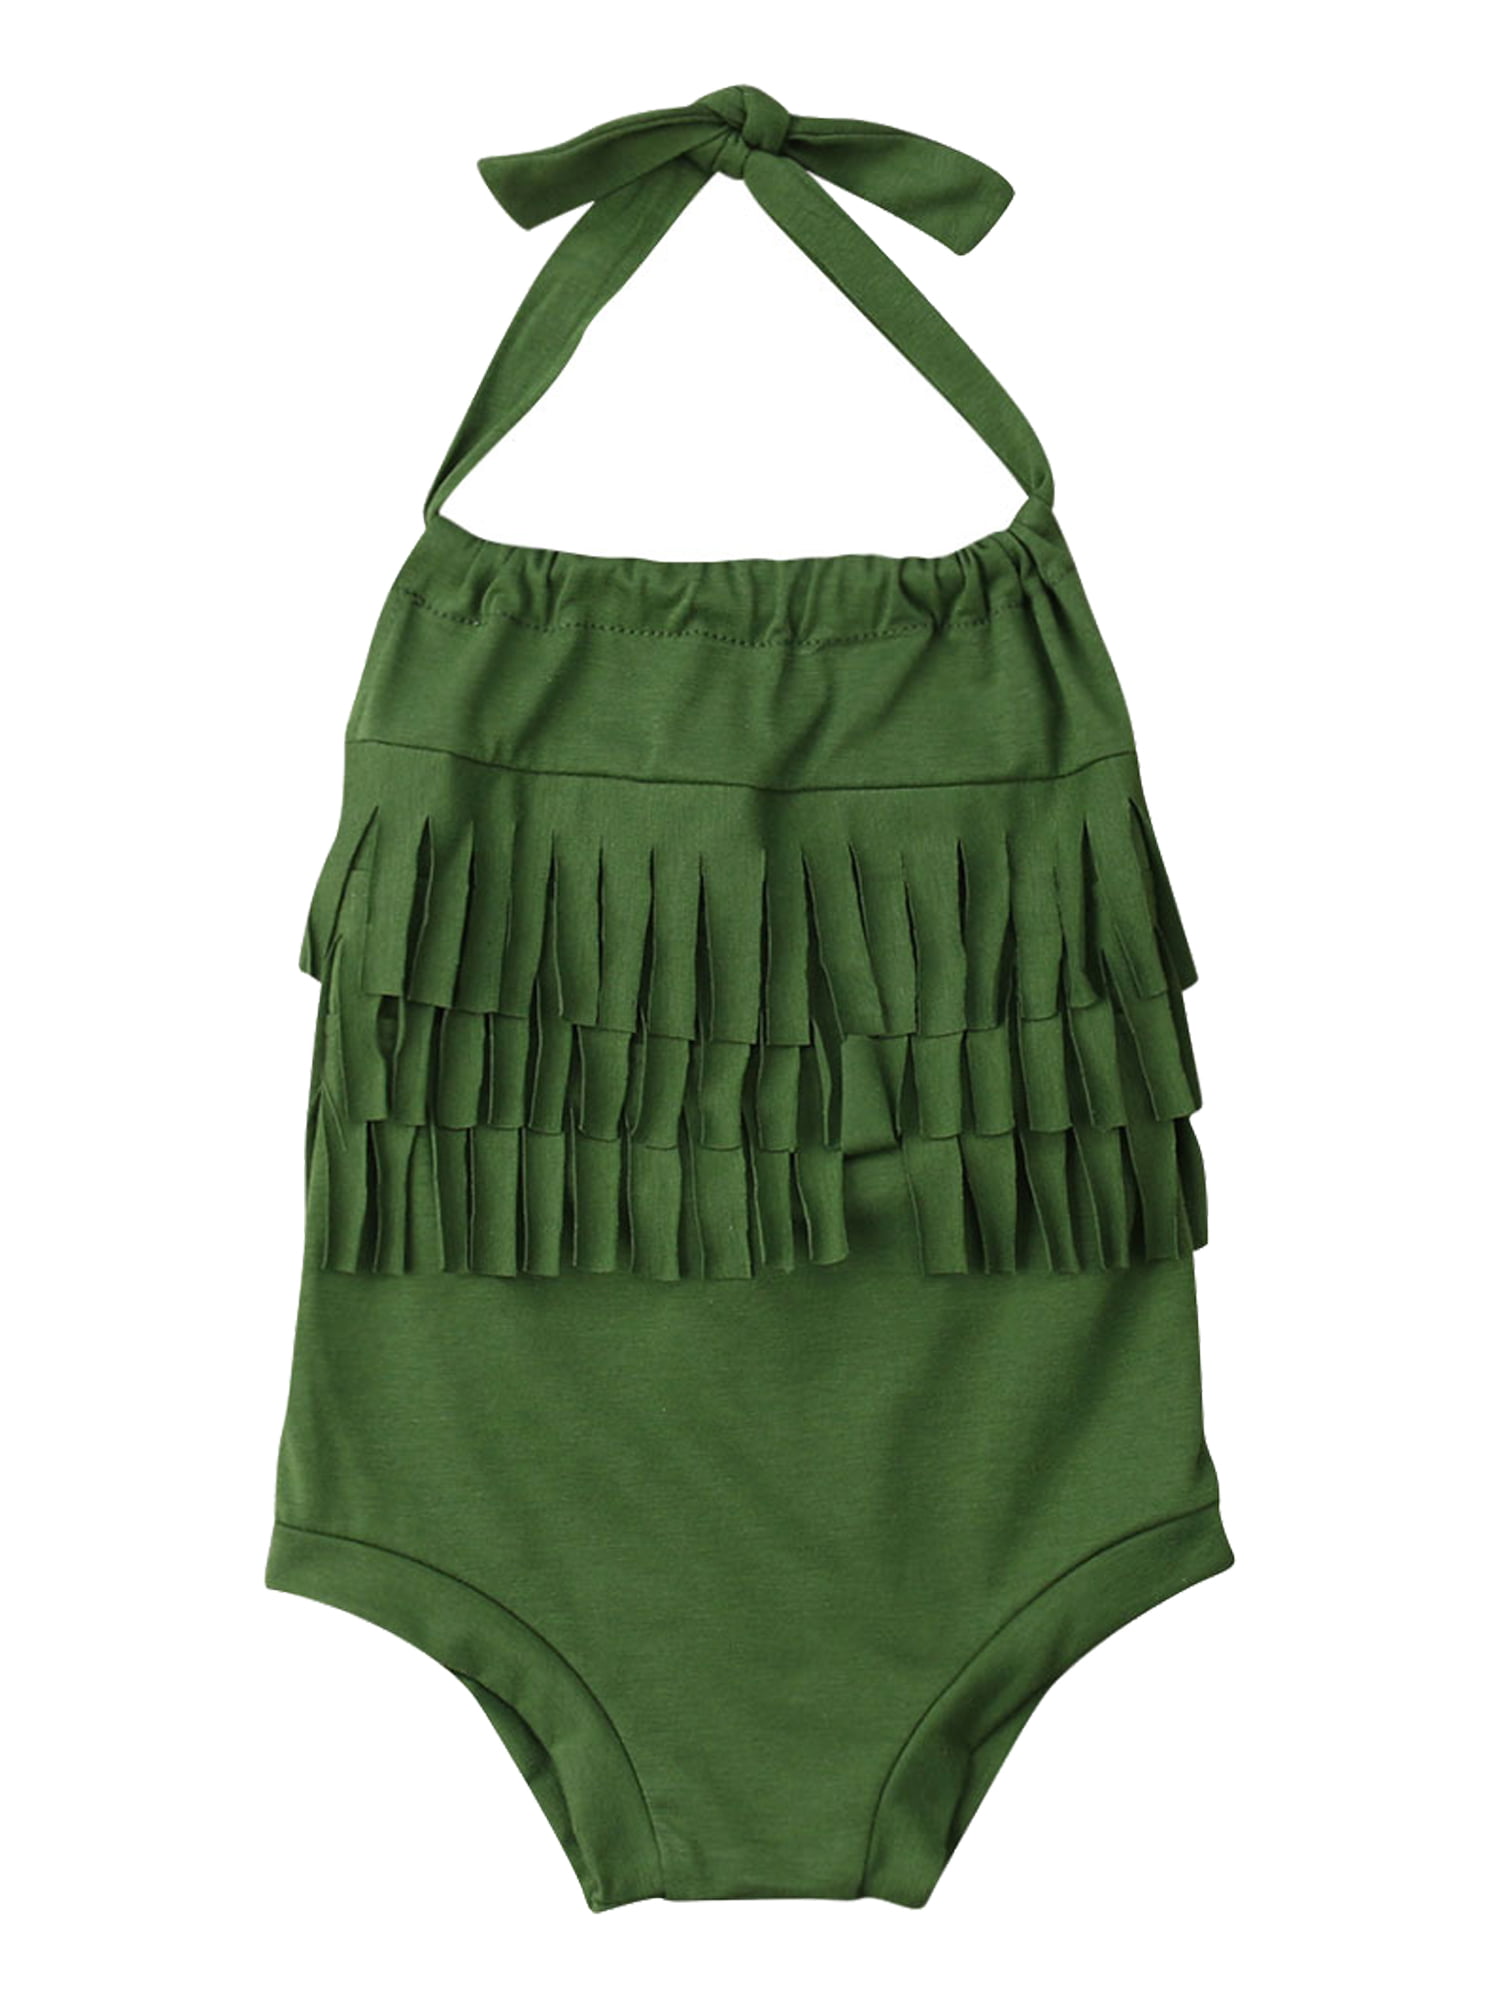 Toddler Baby Girl Leaf Print Halter Romper Overall Jumpsuit Pants Set One Piece Bodysuit Kids Summer Outfits Set 